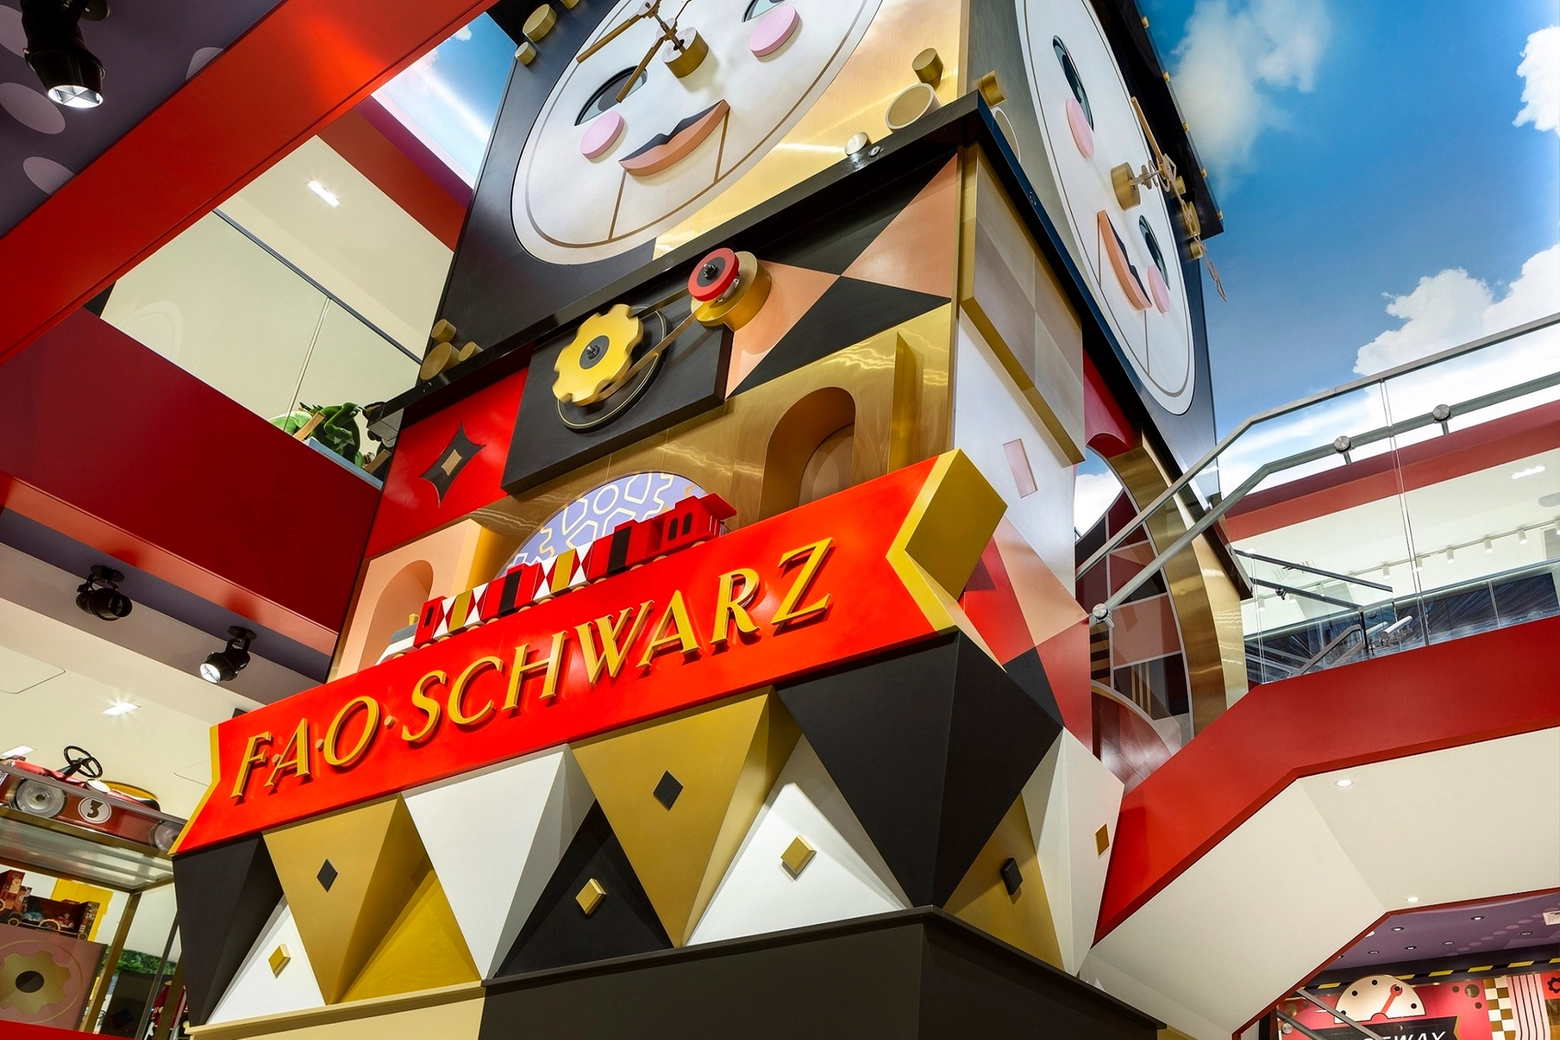 Fao Schwarz, iconico negozio di giocattoli newyorkese, sbarca a Milano